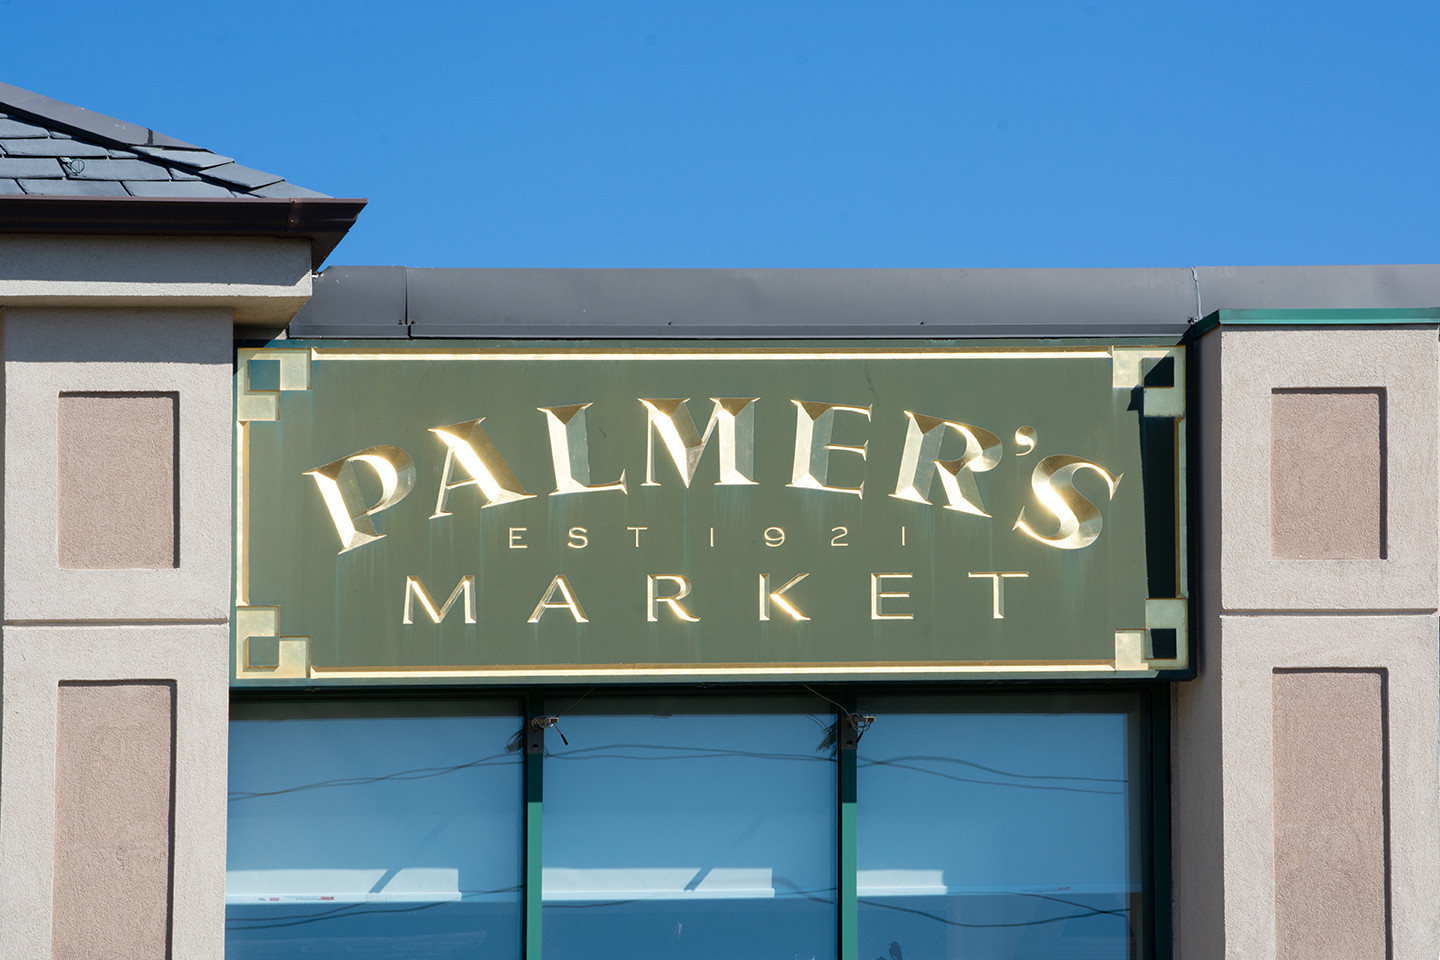 Palmer's Market